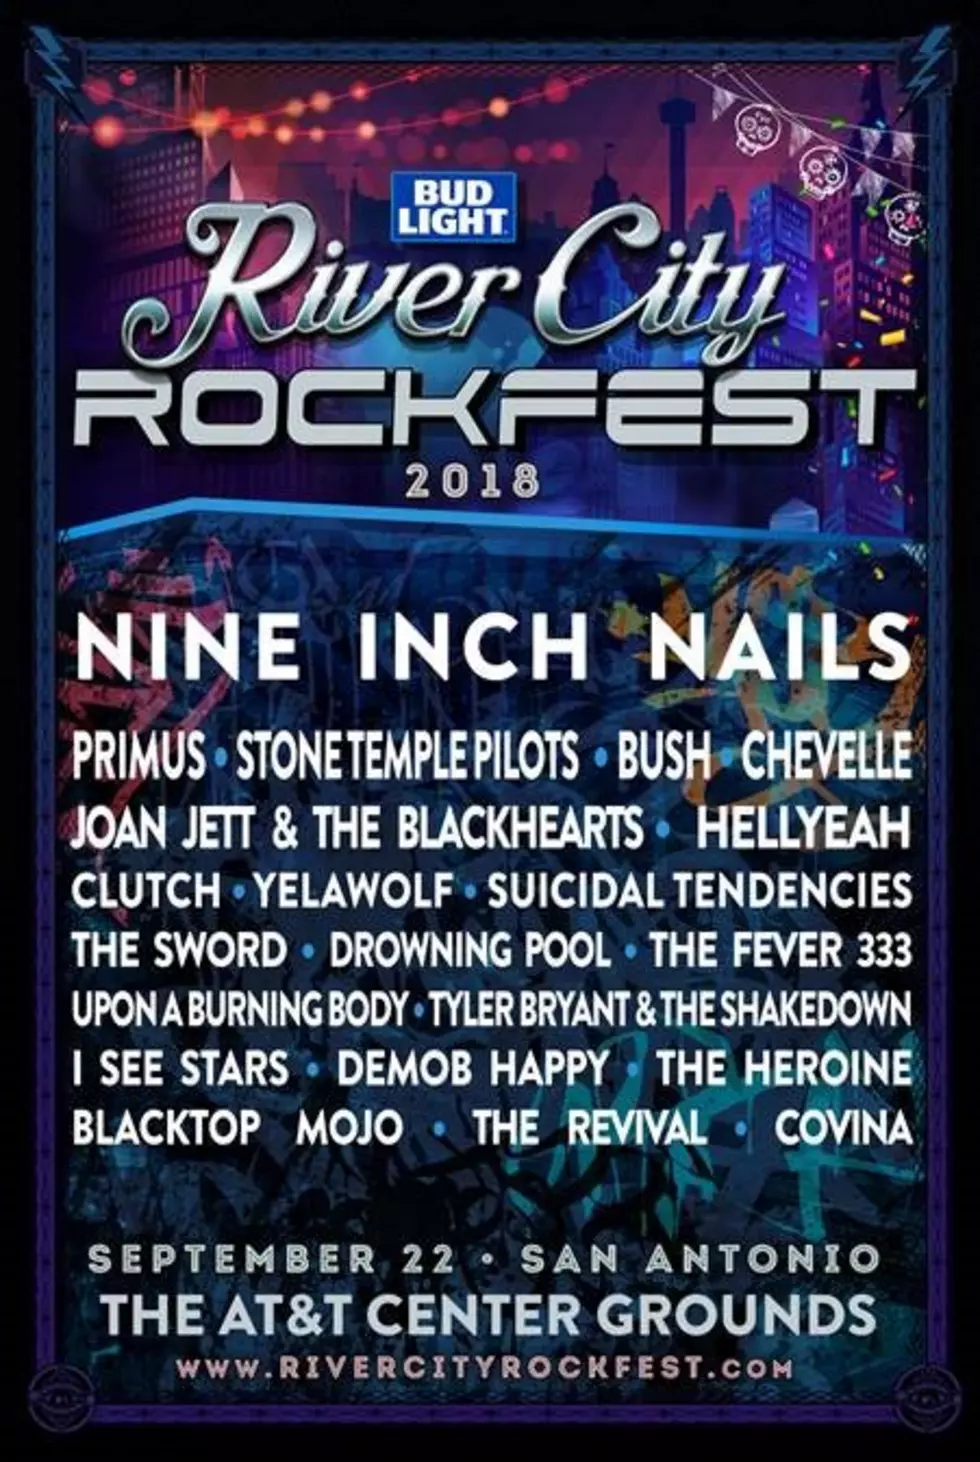 River City Rockfest NEWS UPDATE!